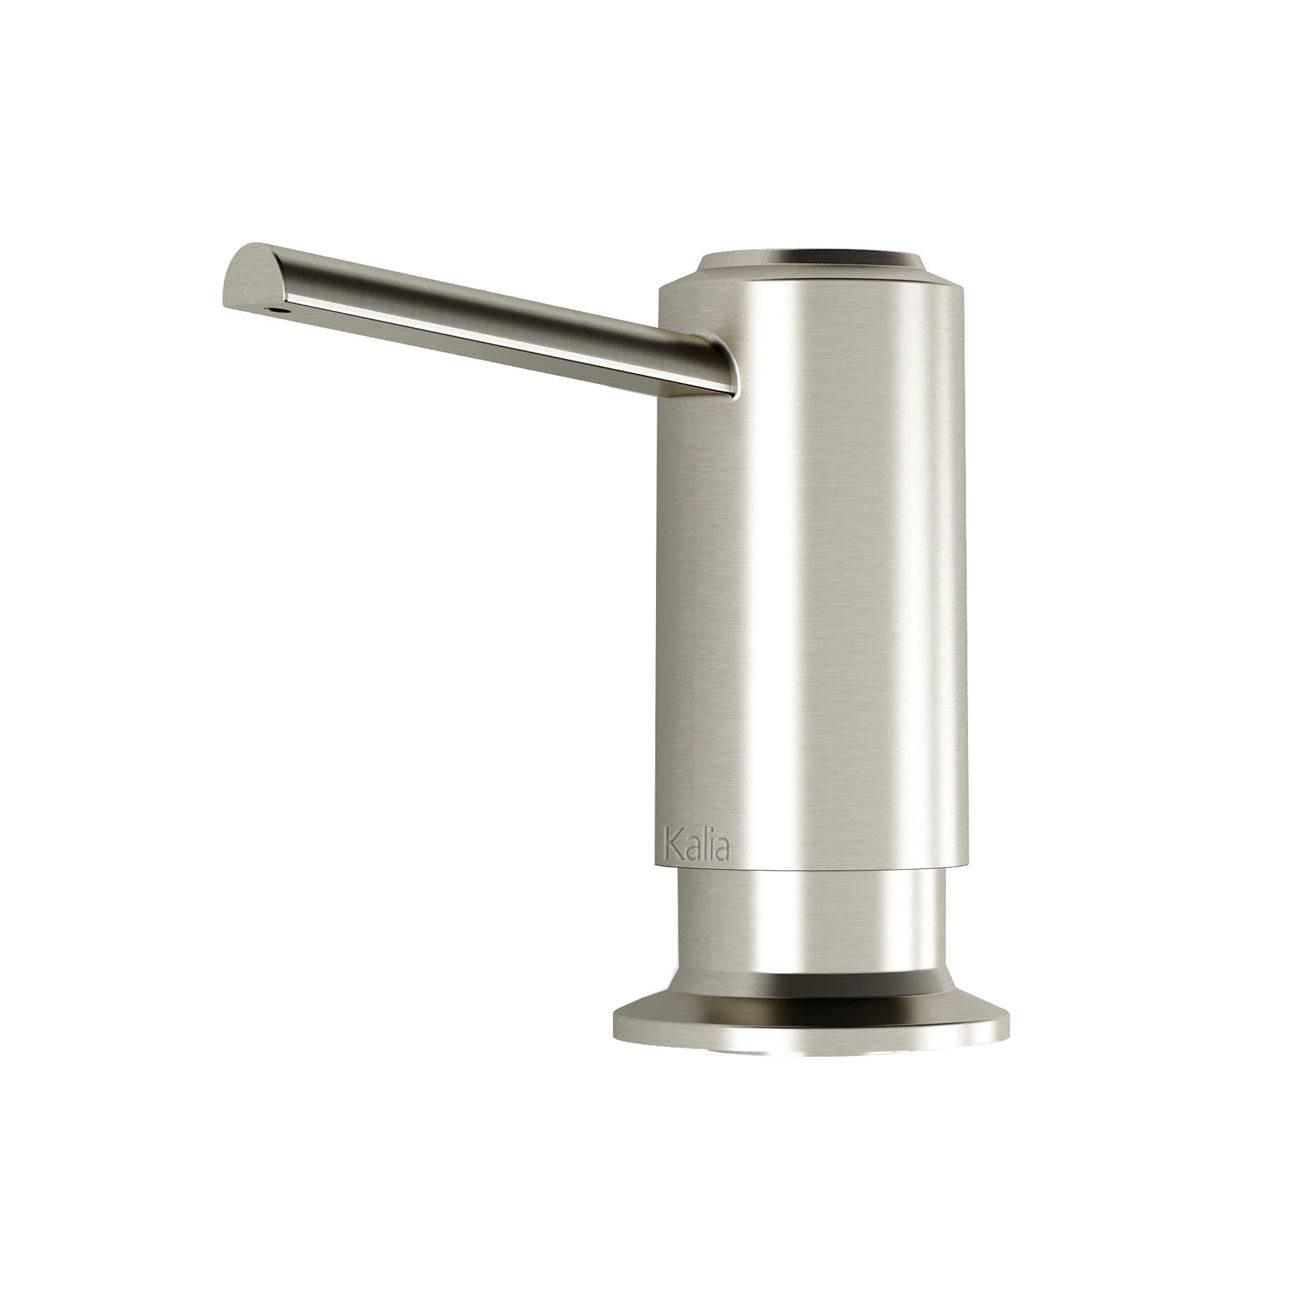 Kalia Cité Soap Dispenser for Kitchen Sink- Stainless Steel PVD